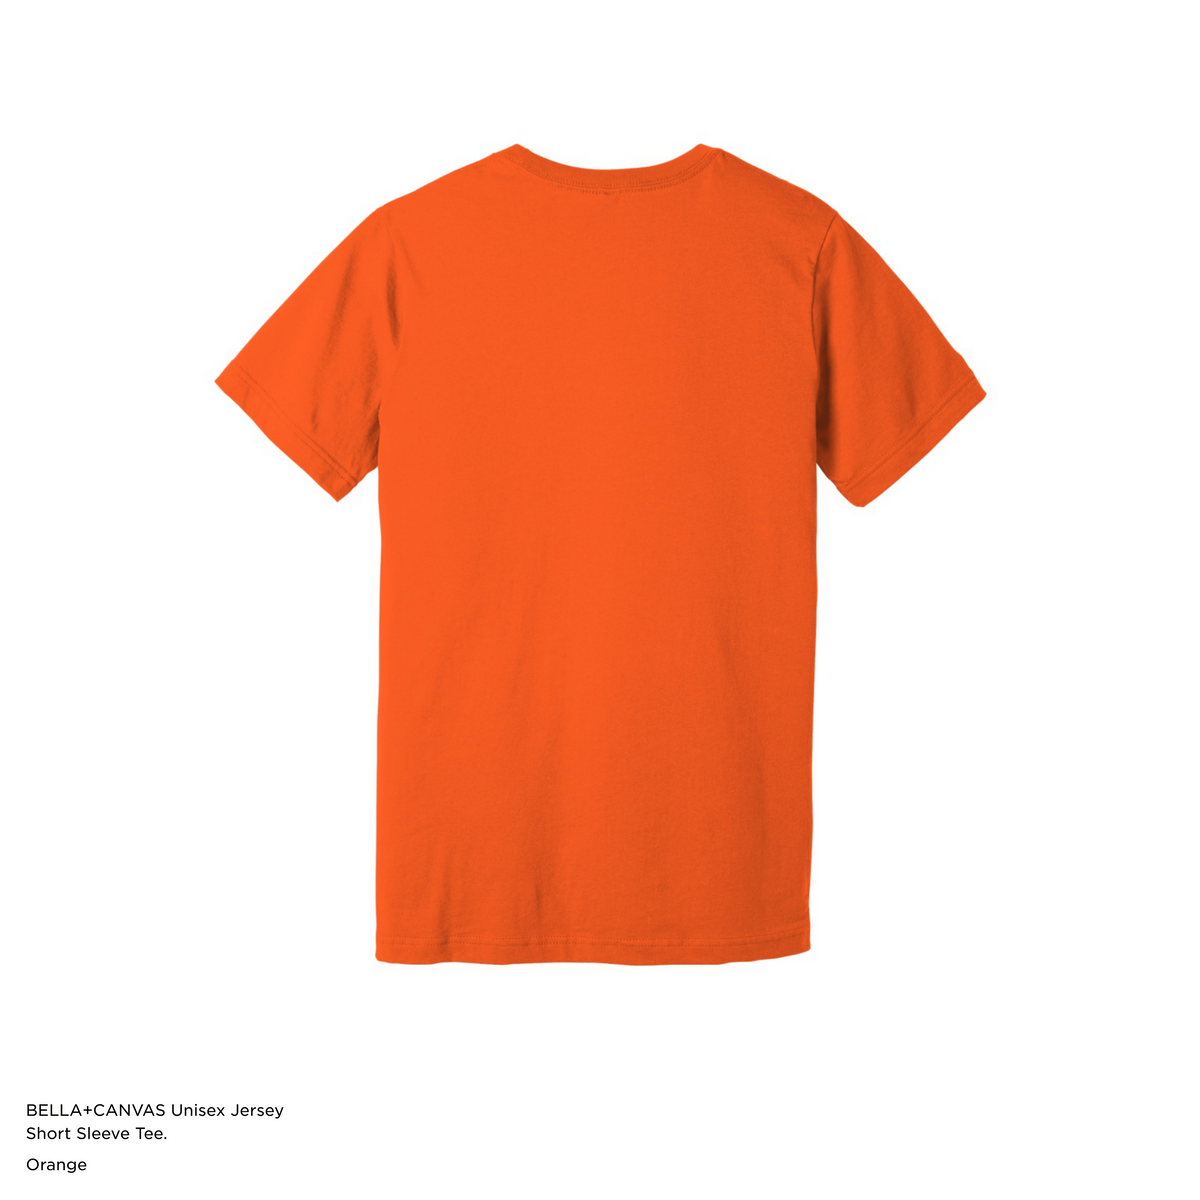 Personalized BELLA+CANVAS Unisex Jersey Short Sleeve T-Shirt